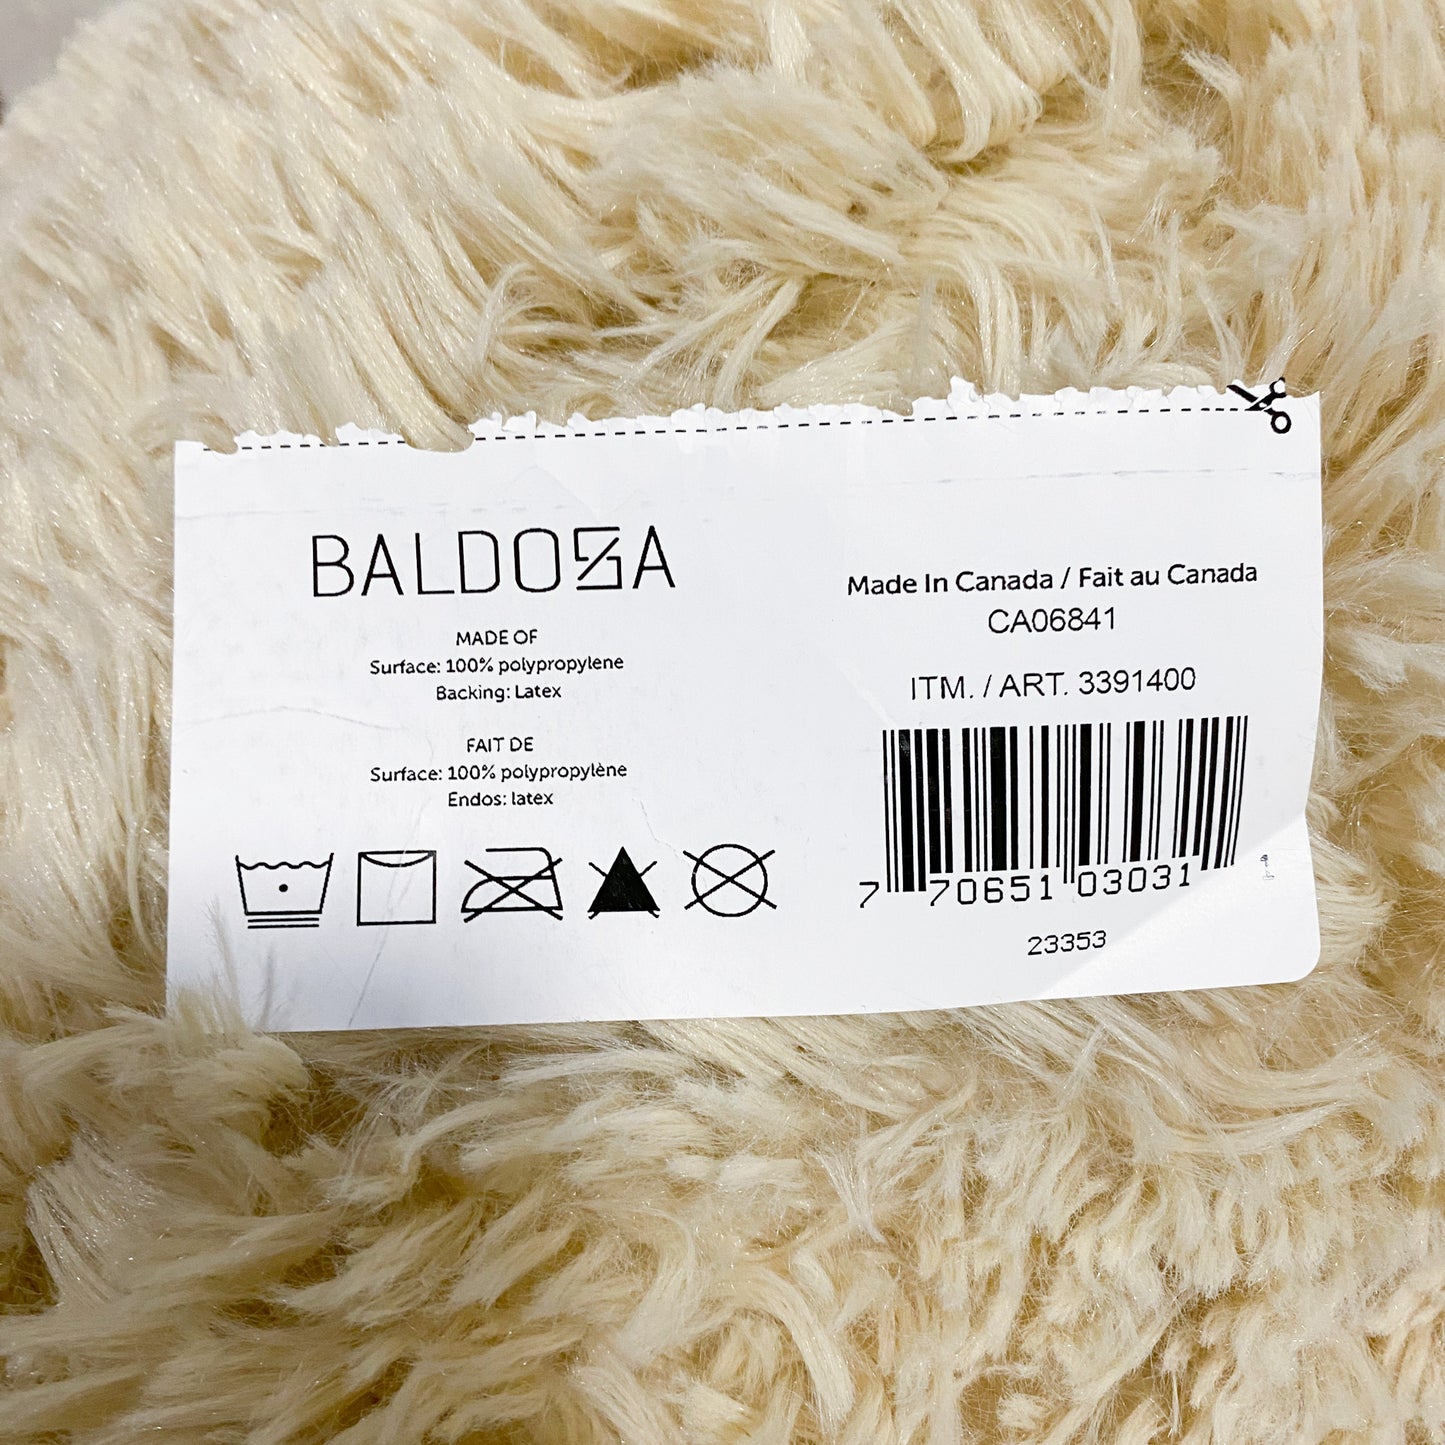 Baldosa Cream Shag Rug